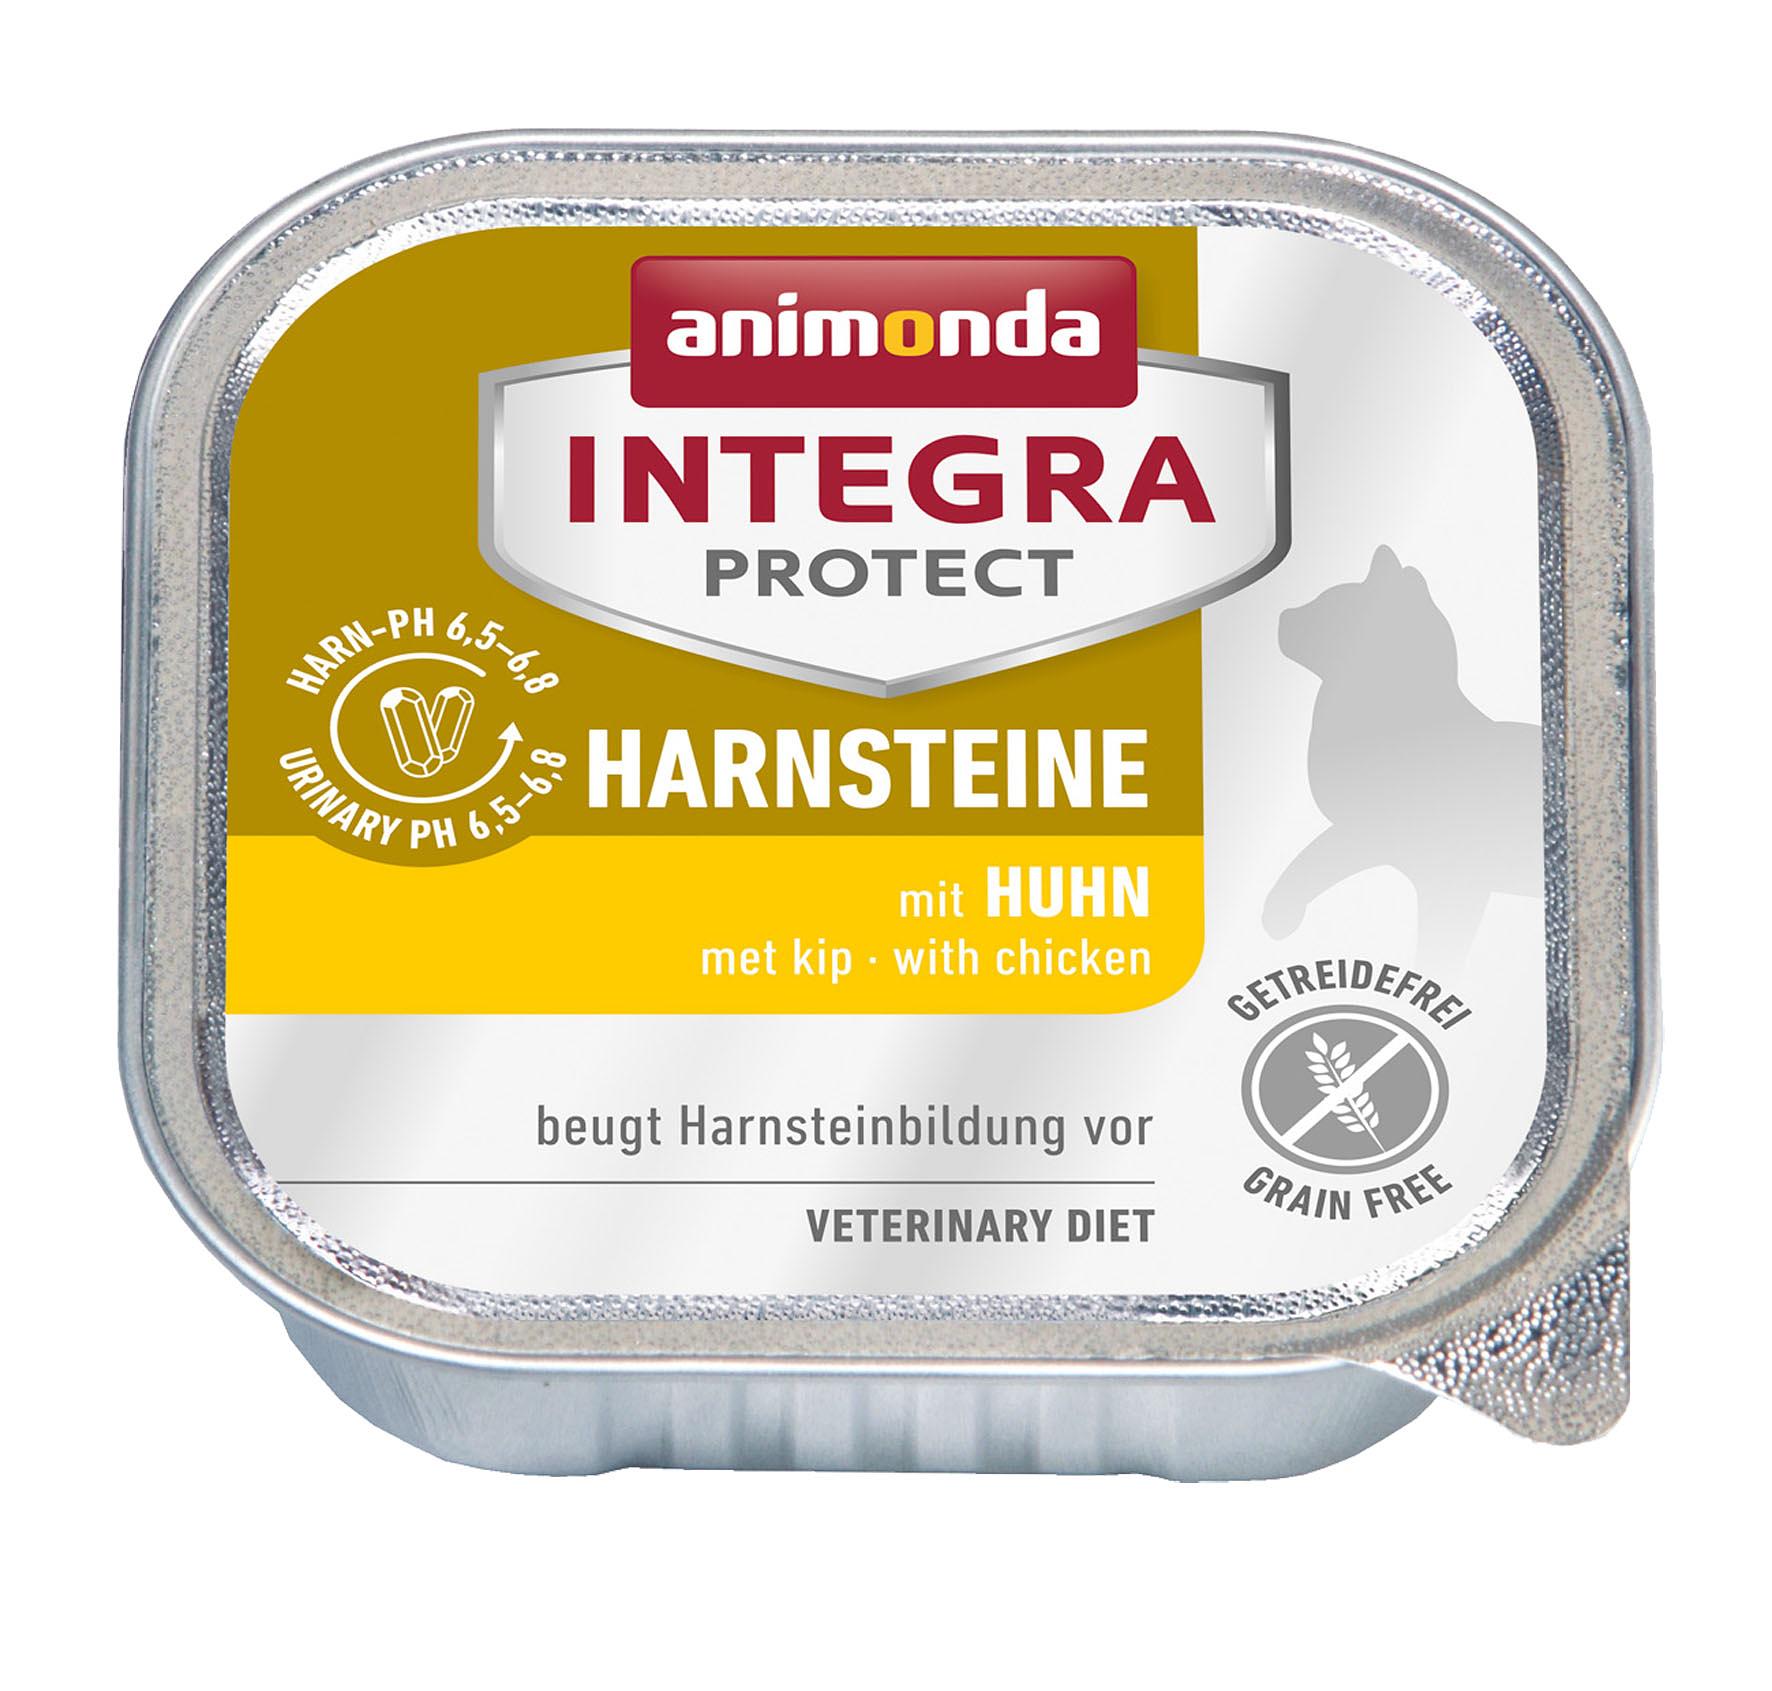 INTEGRA Protect Harnstein Huhn 100g